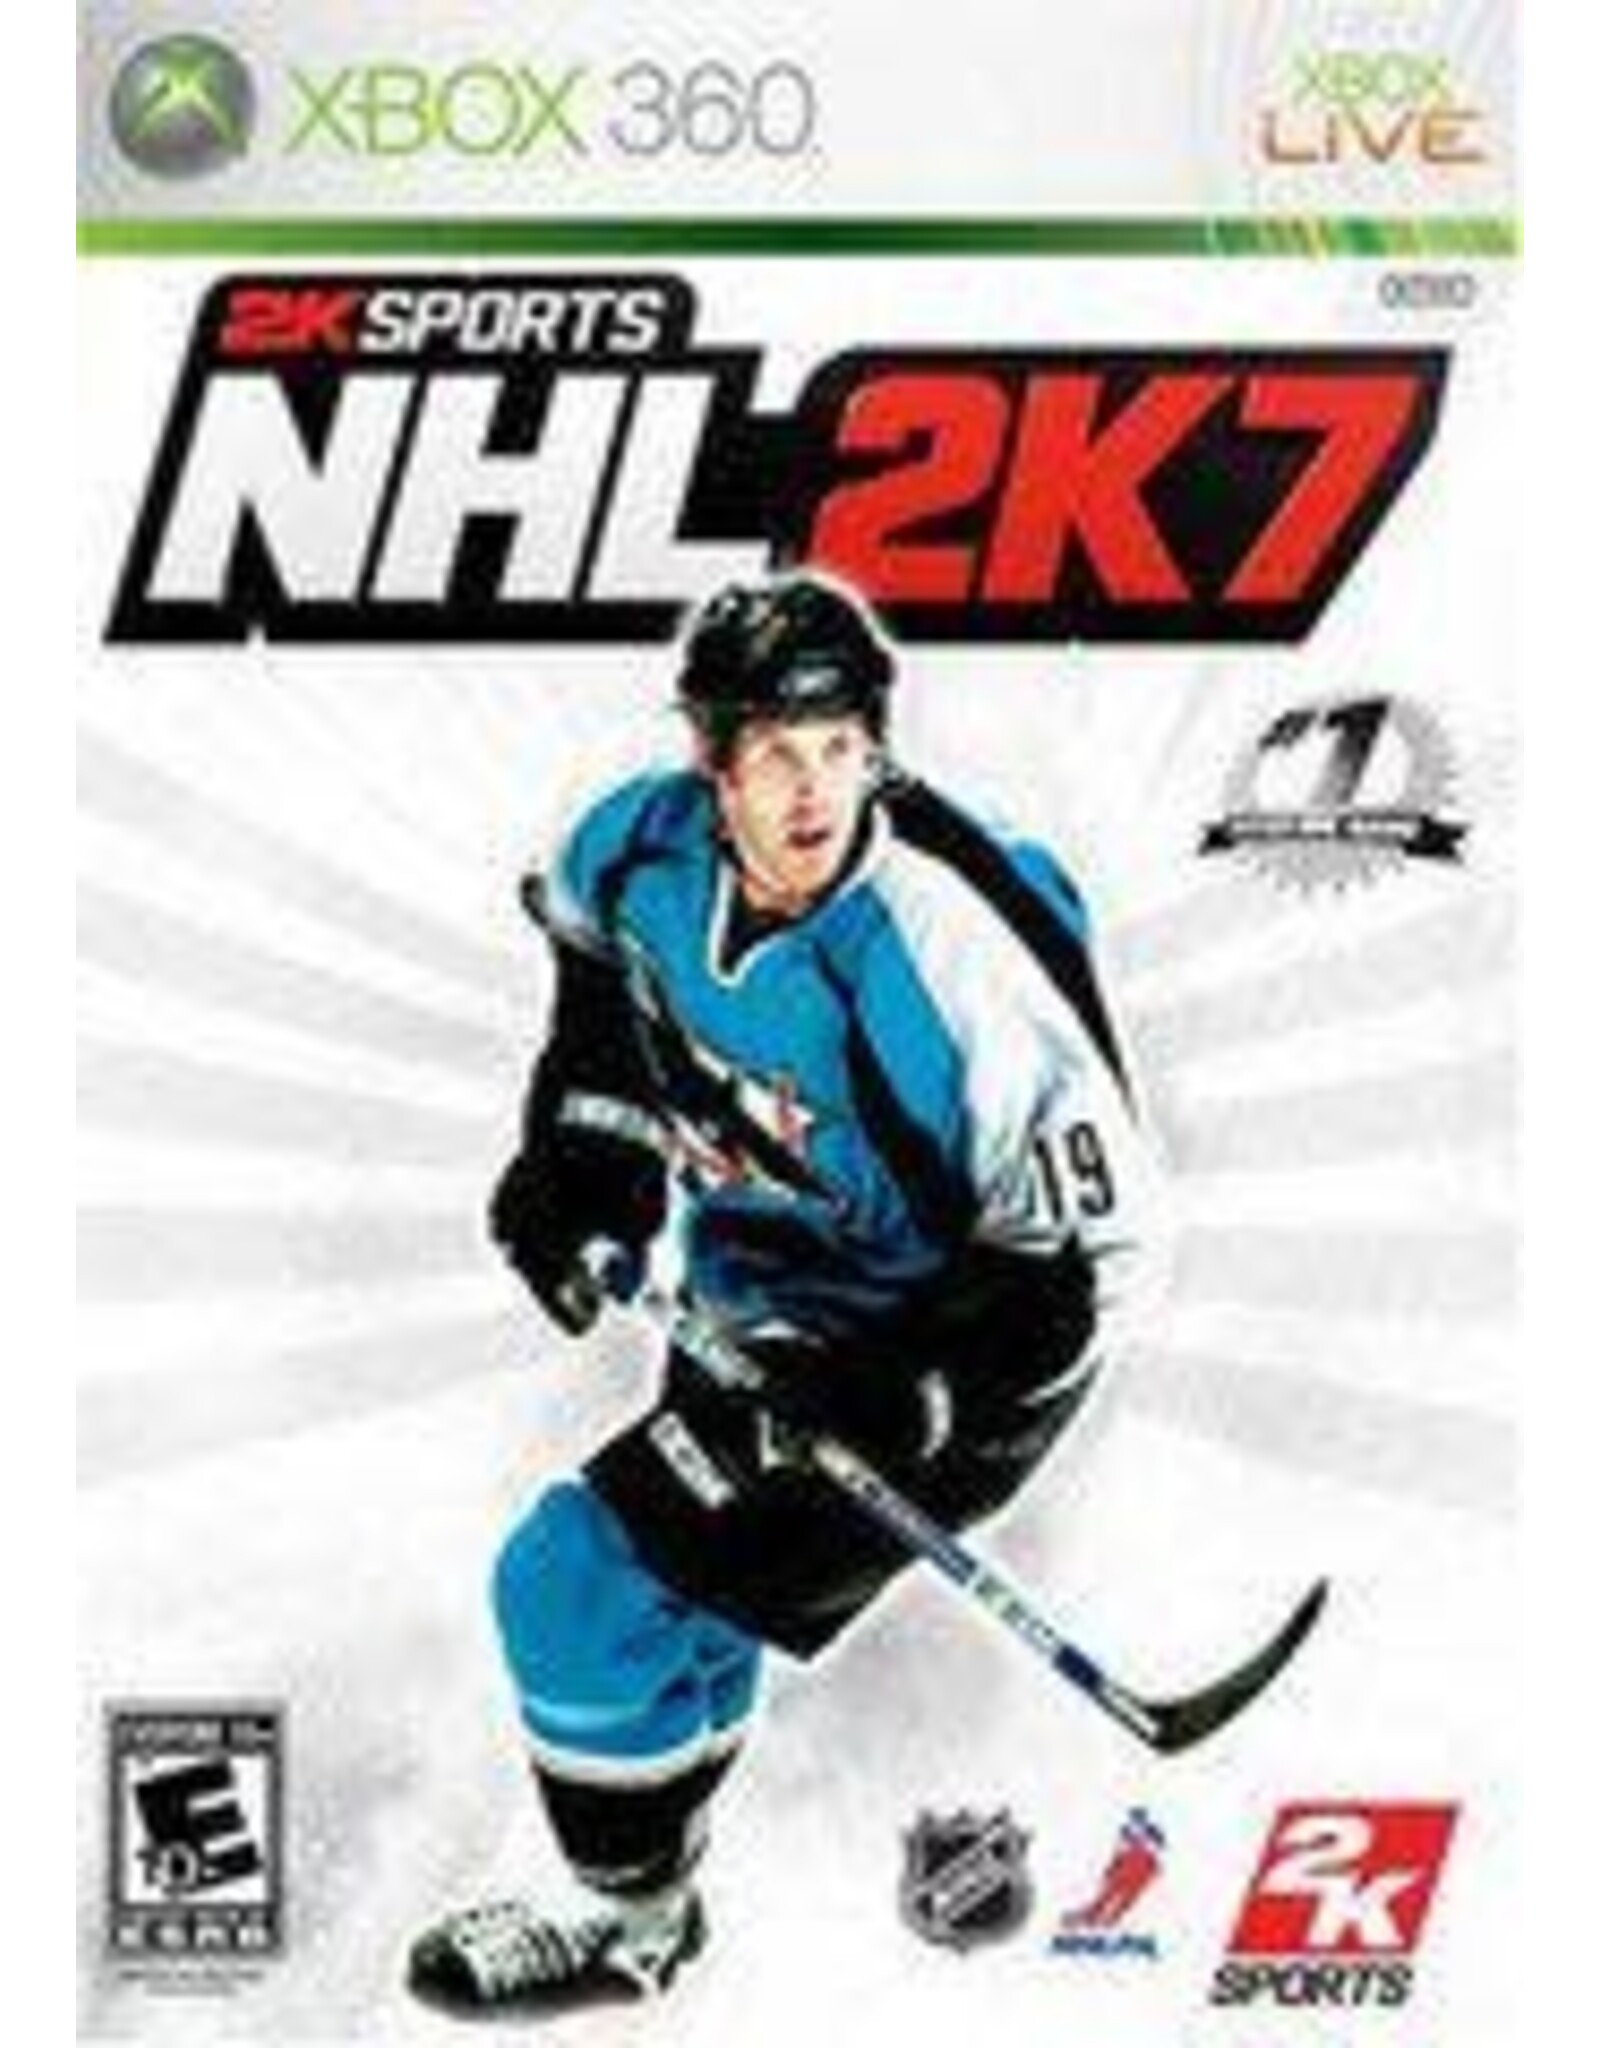 Xbox 360 NHL 2K7 (Used)